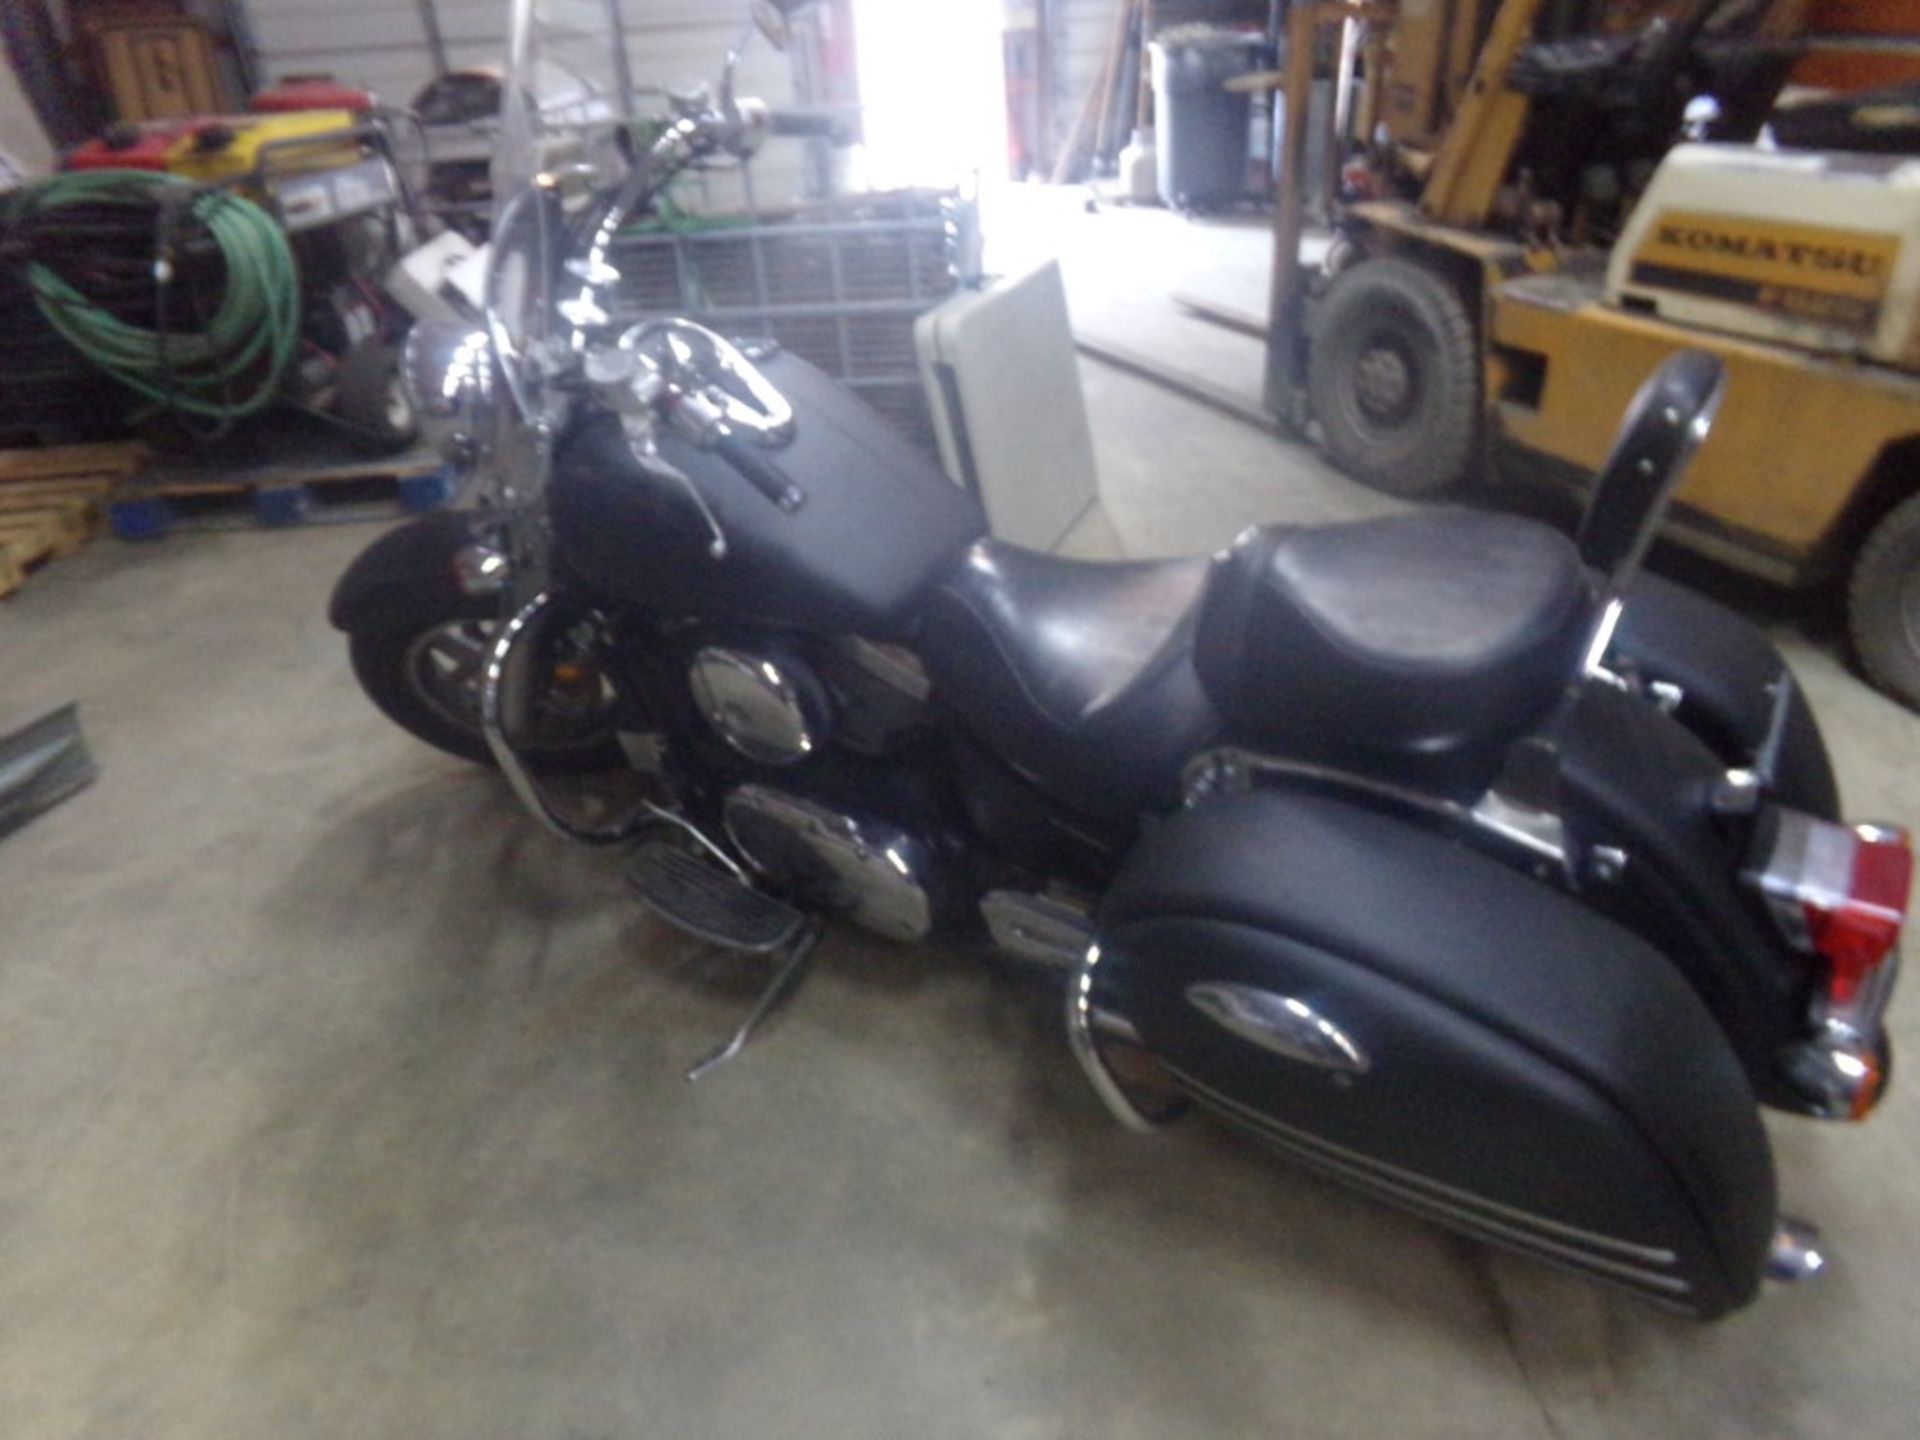 1998 Valcan Kawasaki 1500c Motorcycle w/Side Bags, Windshield, Flat Black, 19,662 Miles, VIN#: - Image 6 of 7